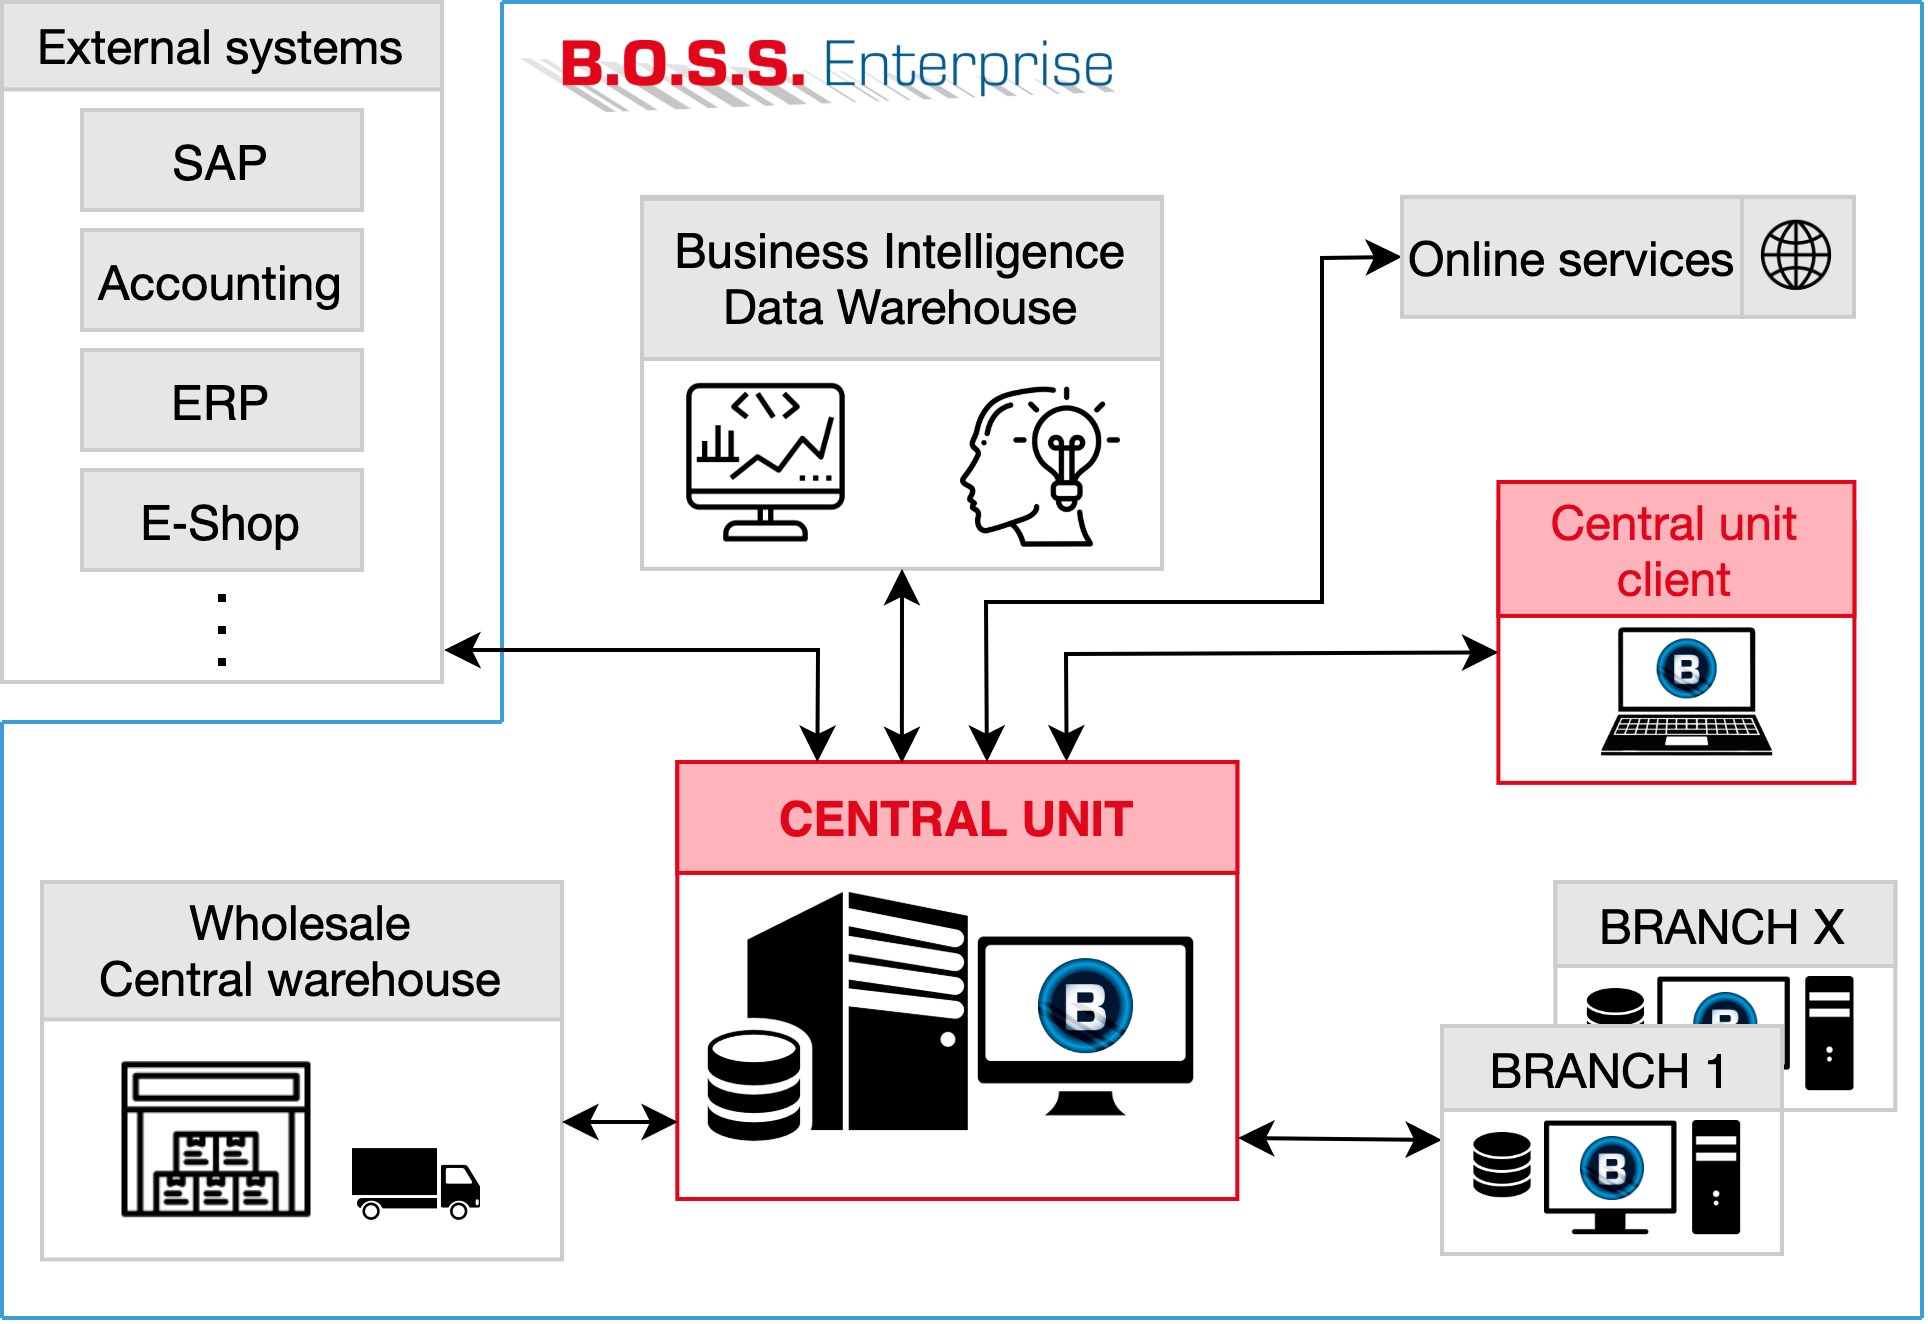 Architecture diagram of the B.O.S.S. Enterprise central unit